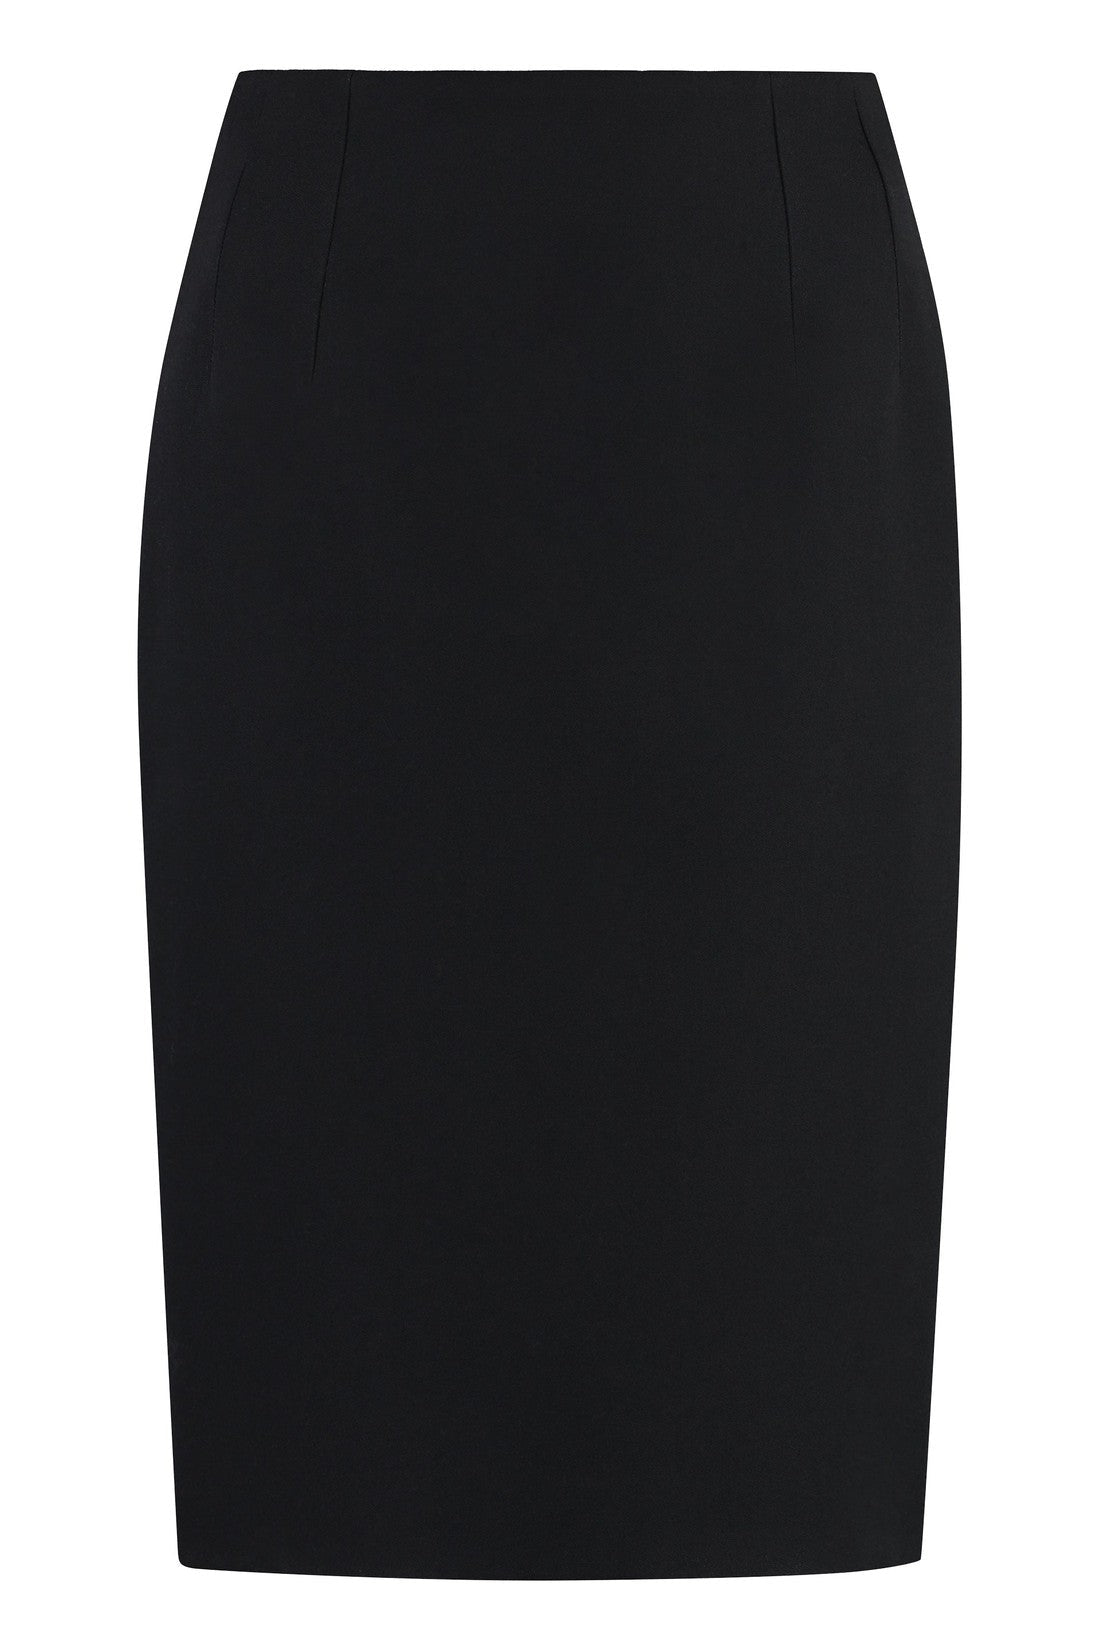 Versace-OUTLET-SALE-Wool pencil skirt-ARCHIVIST